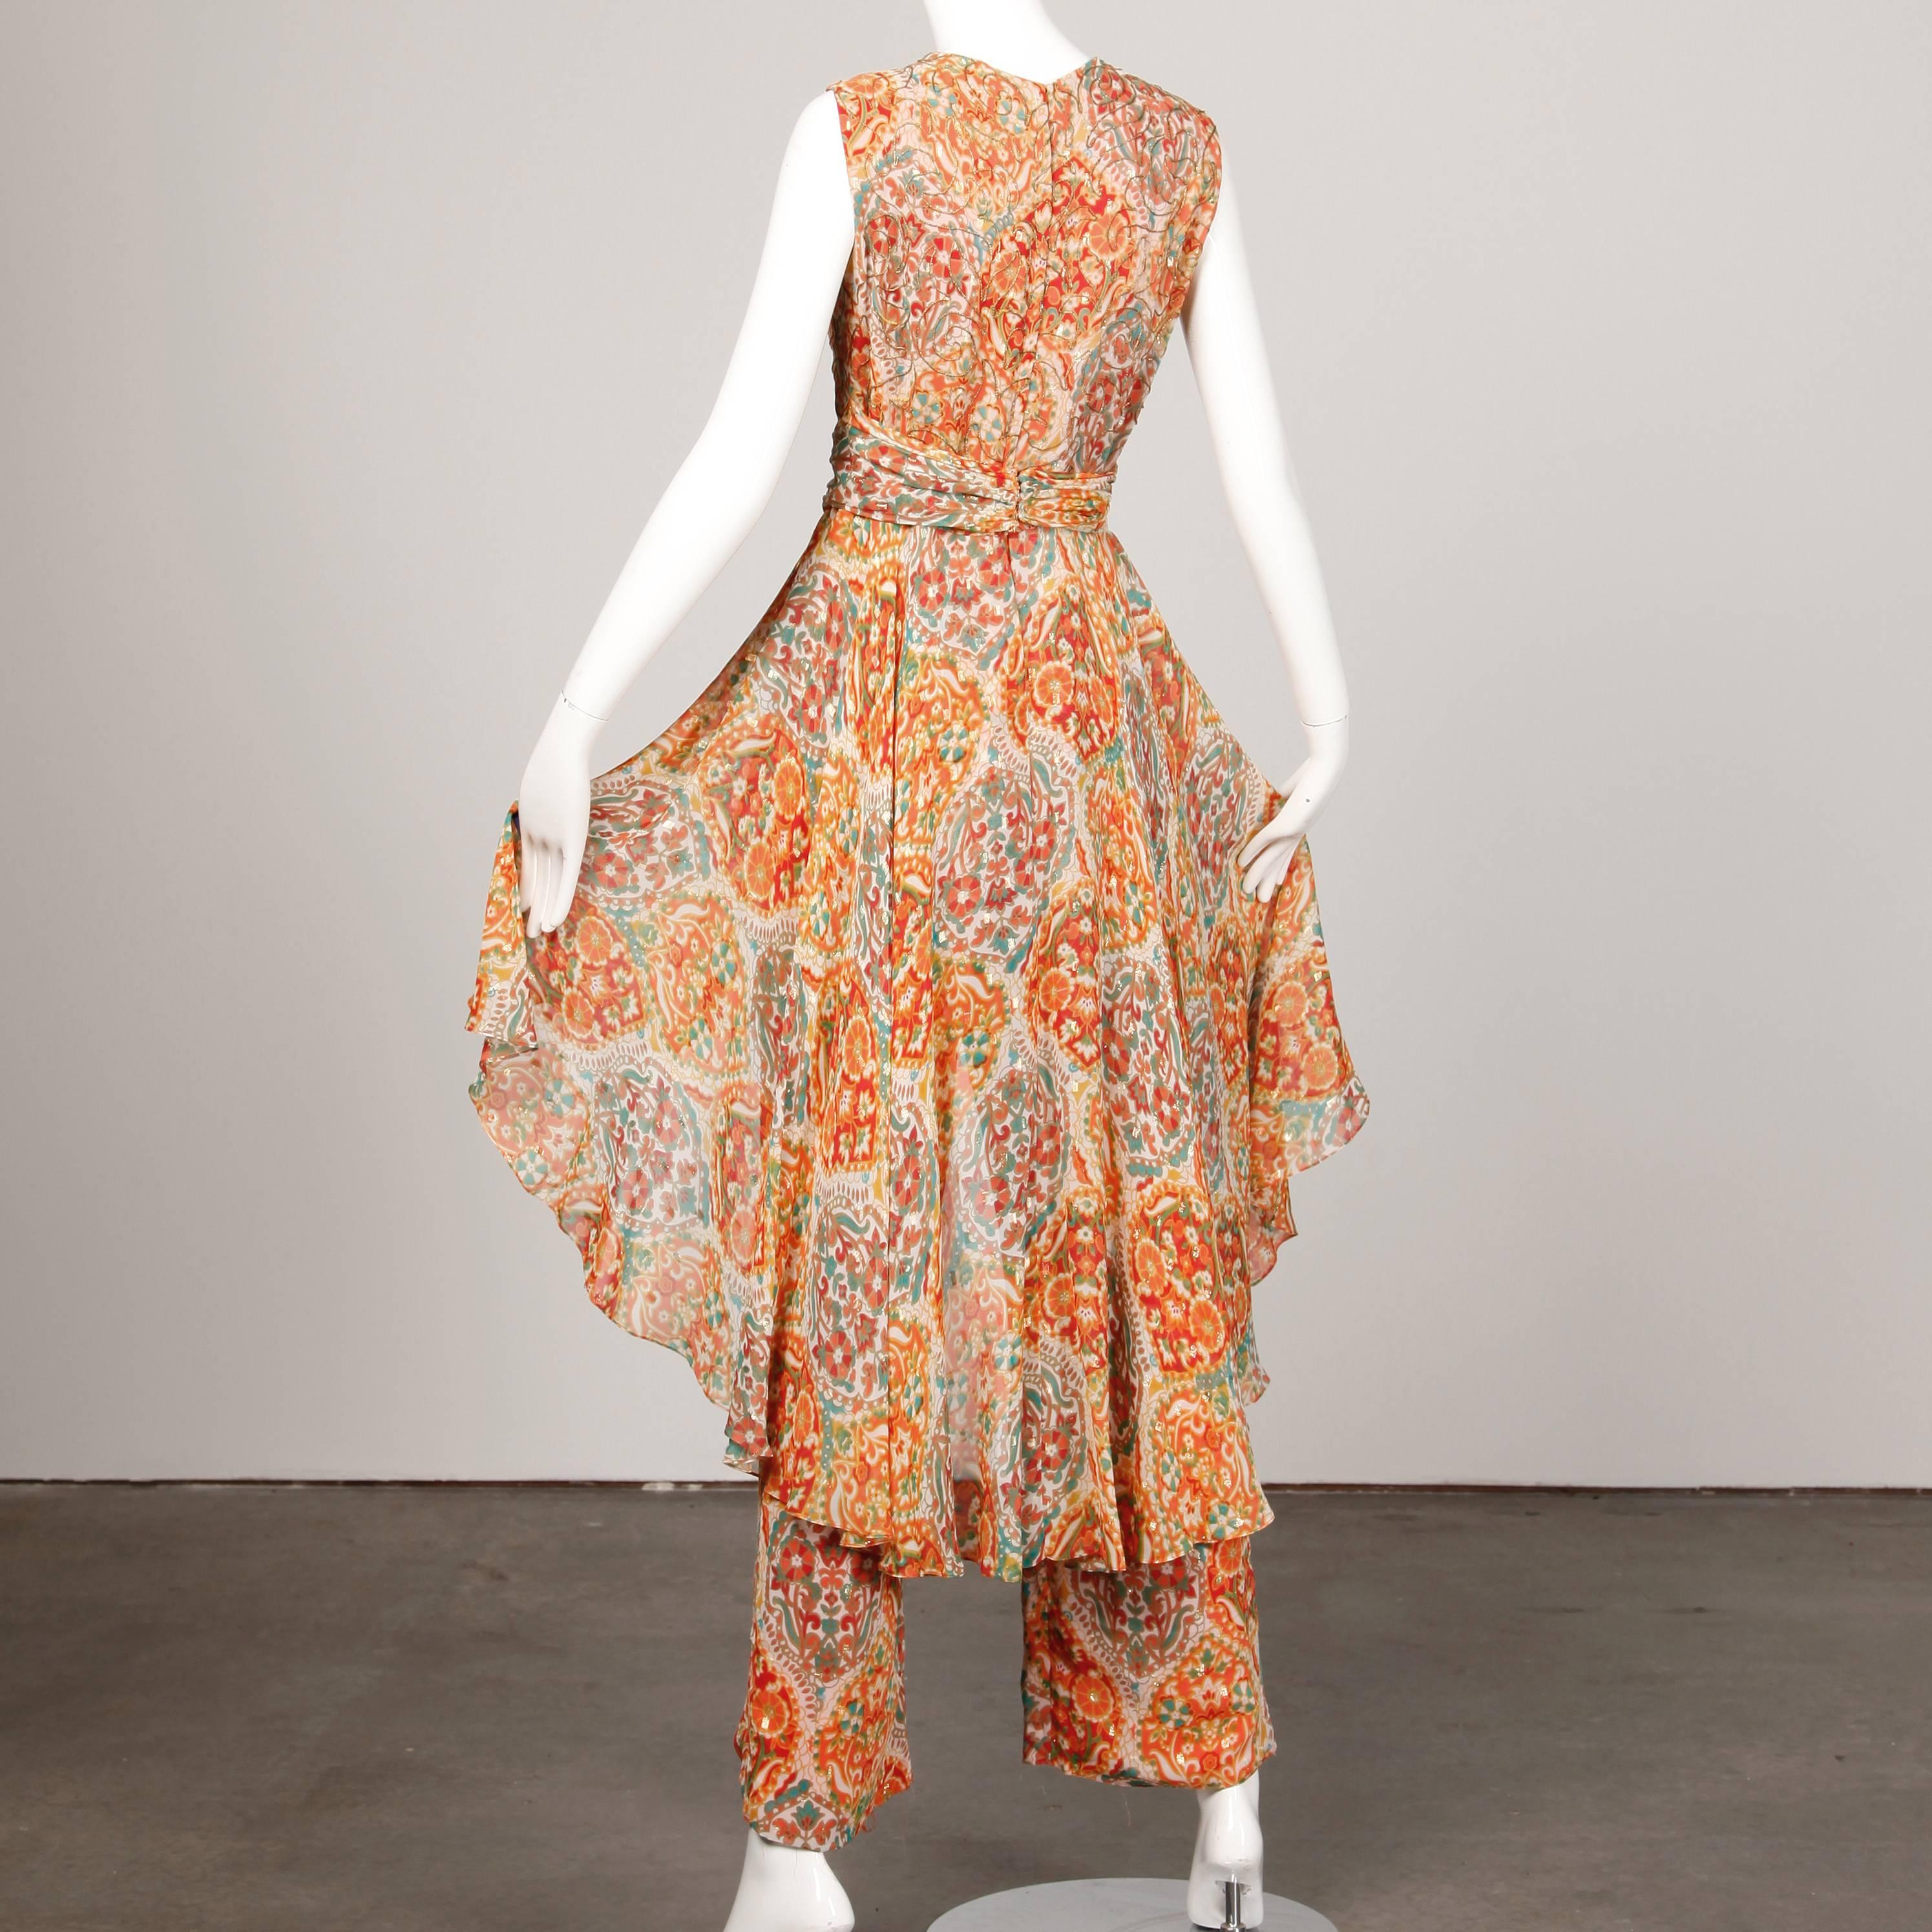 Oscar de la Renta 1960s Vintage Metallic Paisley Print Jumpsuit Dress with Skirt 1